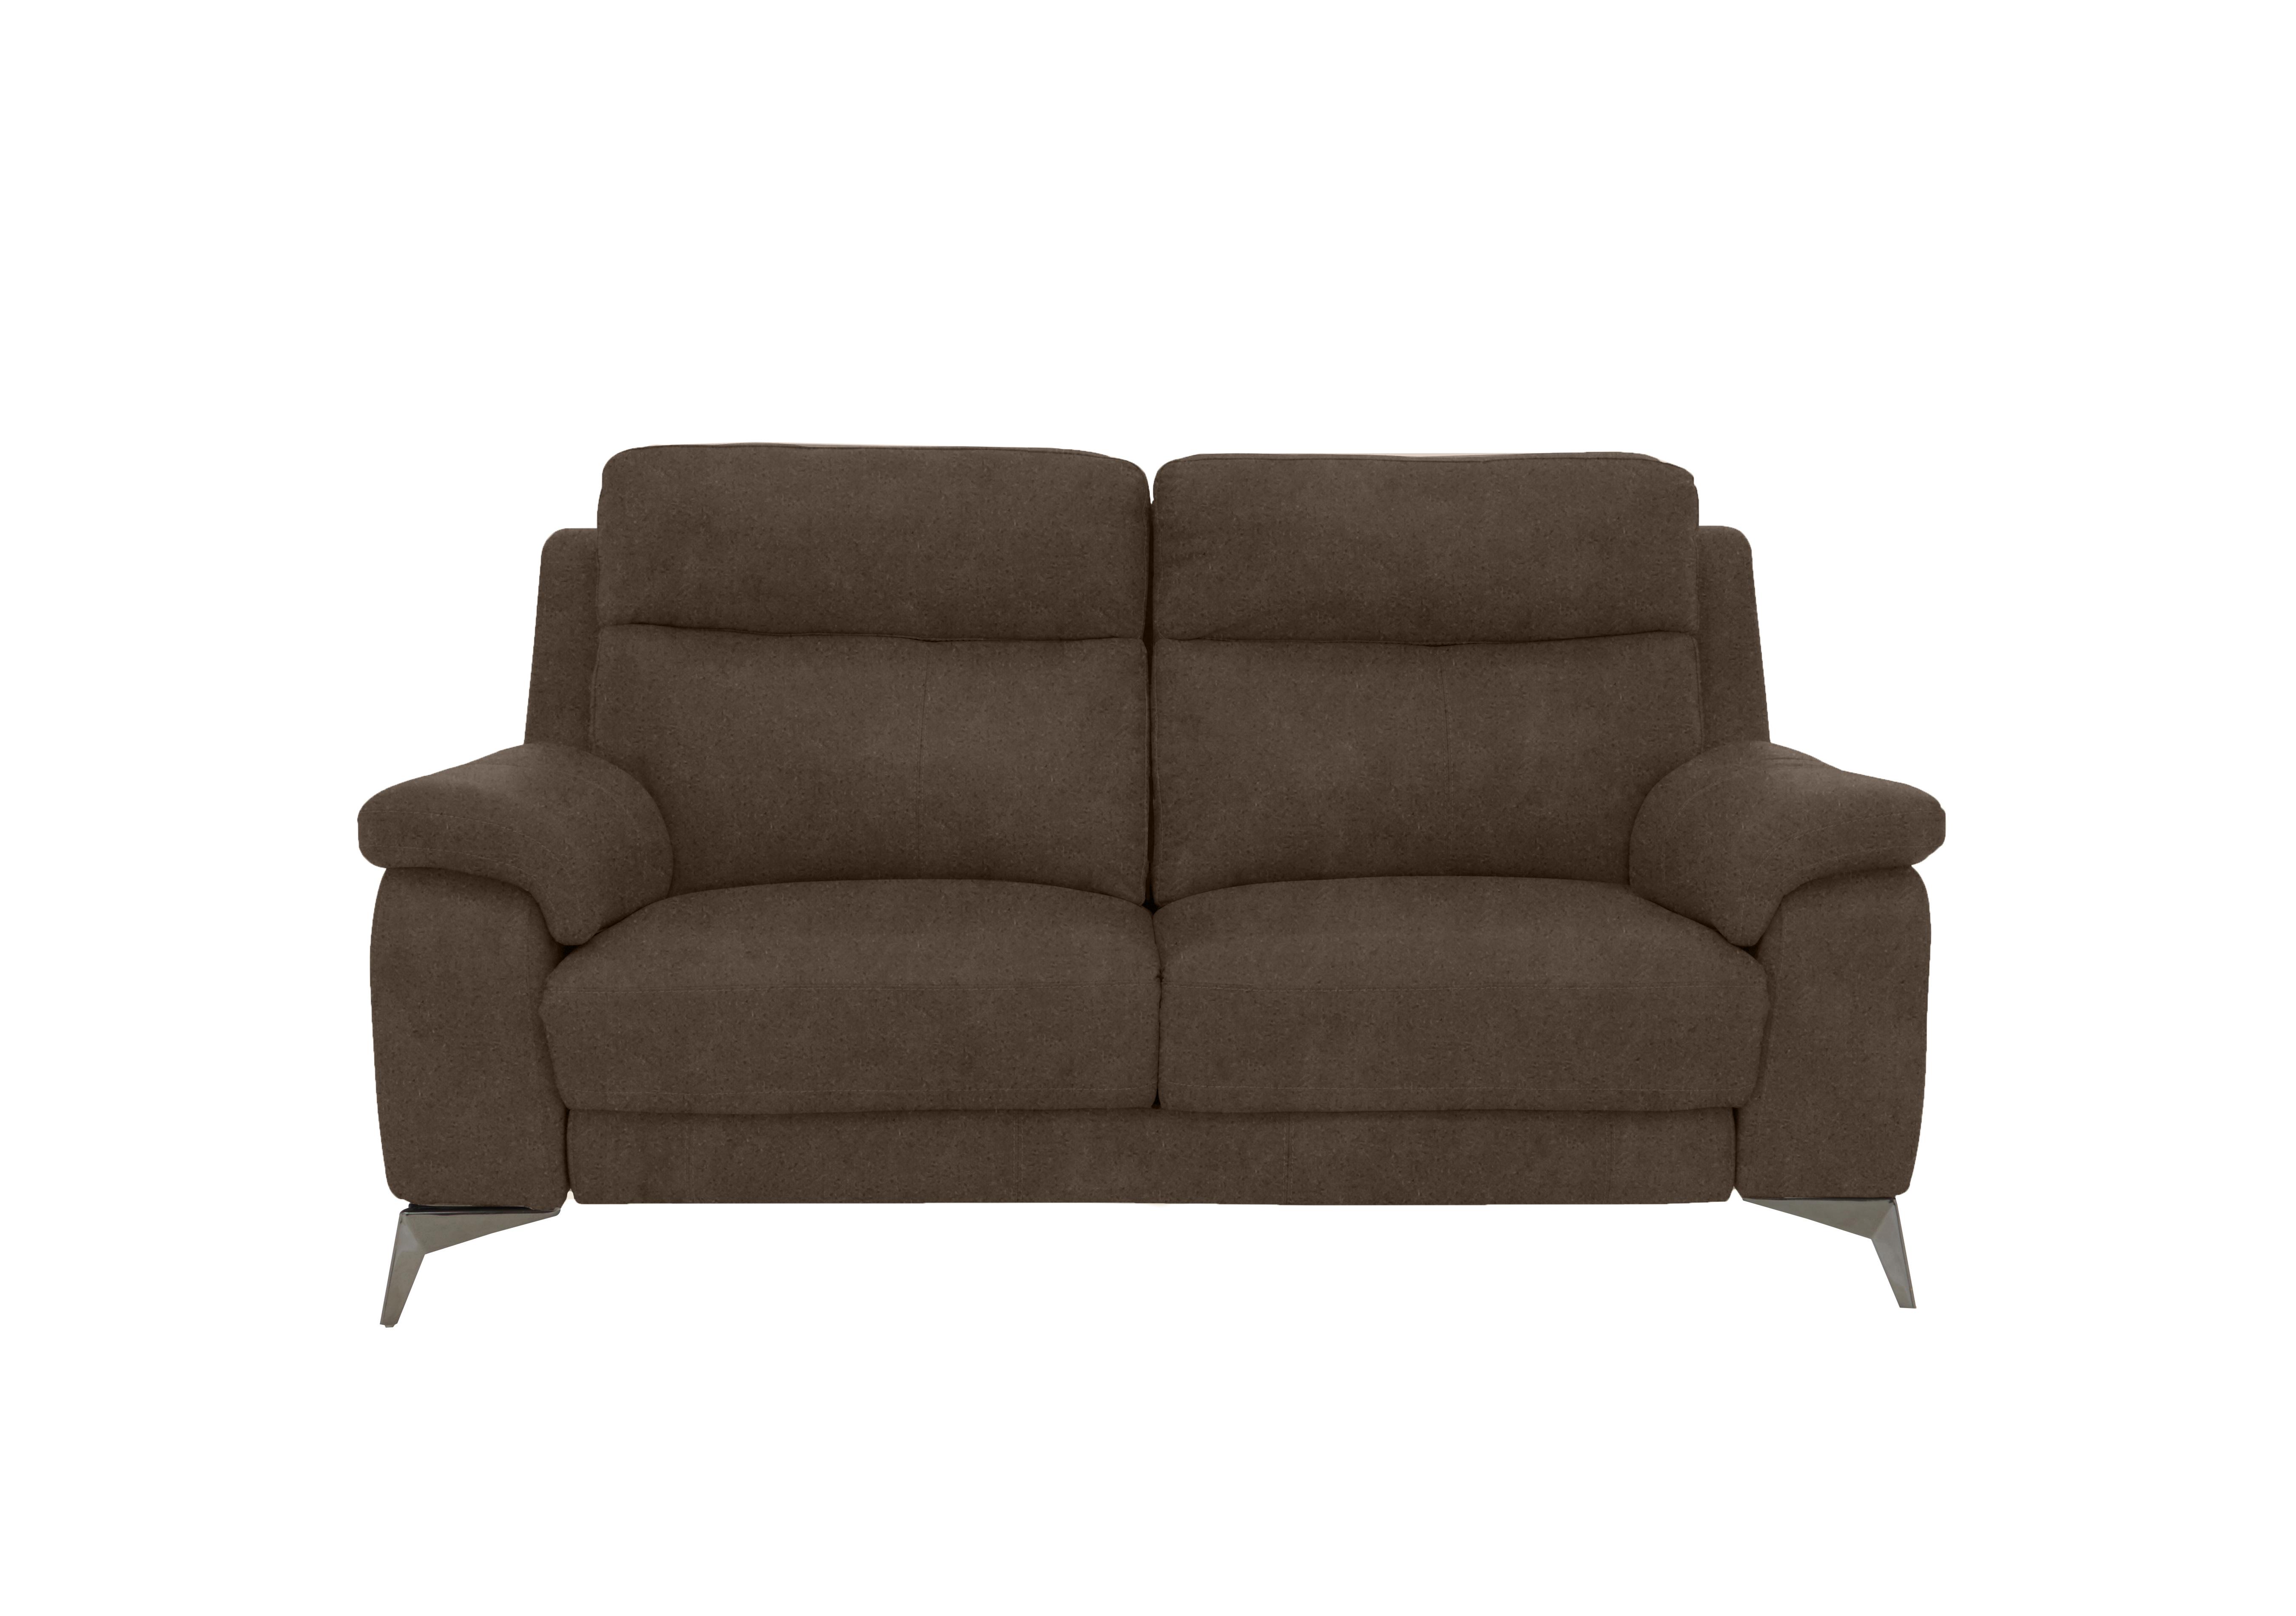 Missouri 2 Seater Fabric Sofa in Bfa-Blj-R16 Grey on Furniture Village